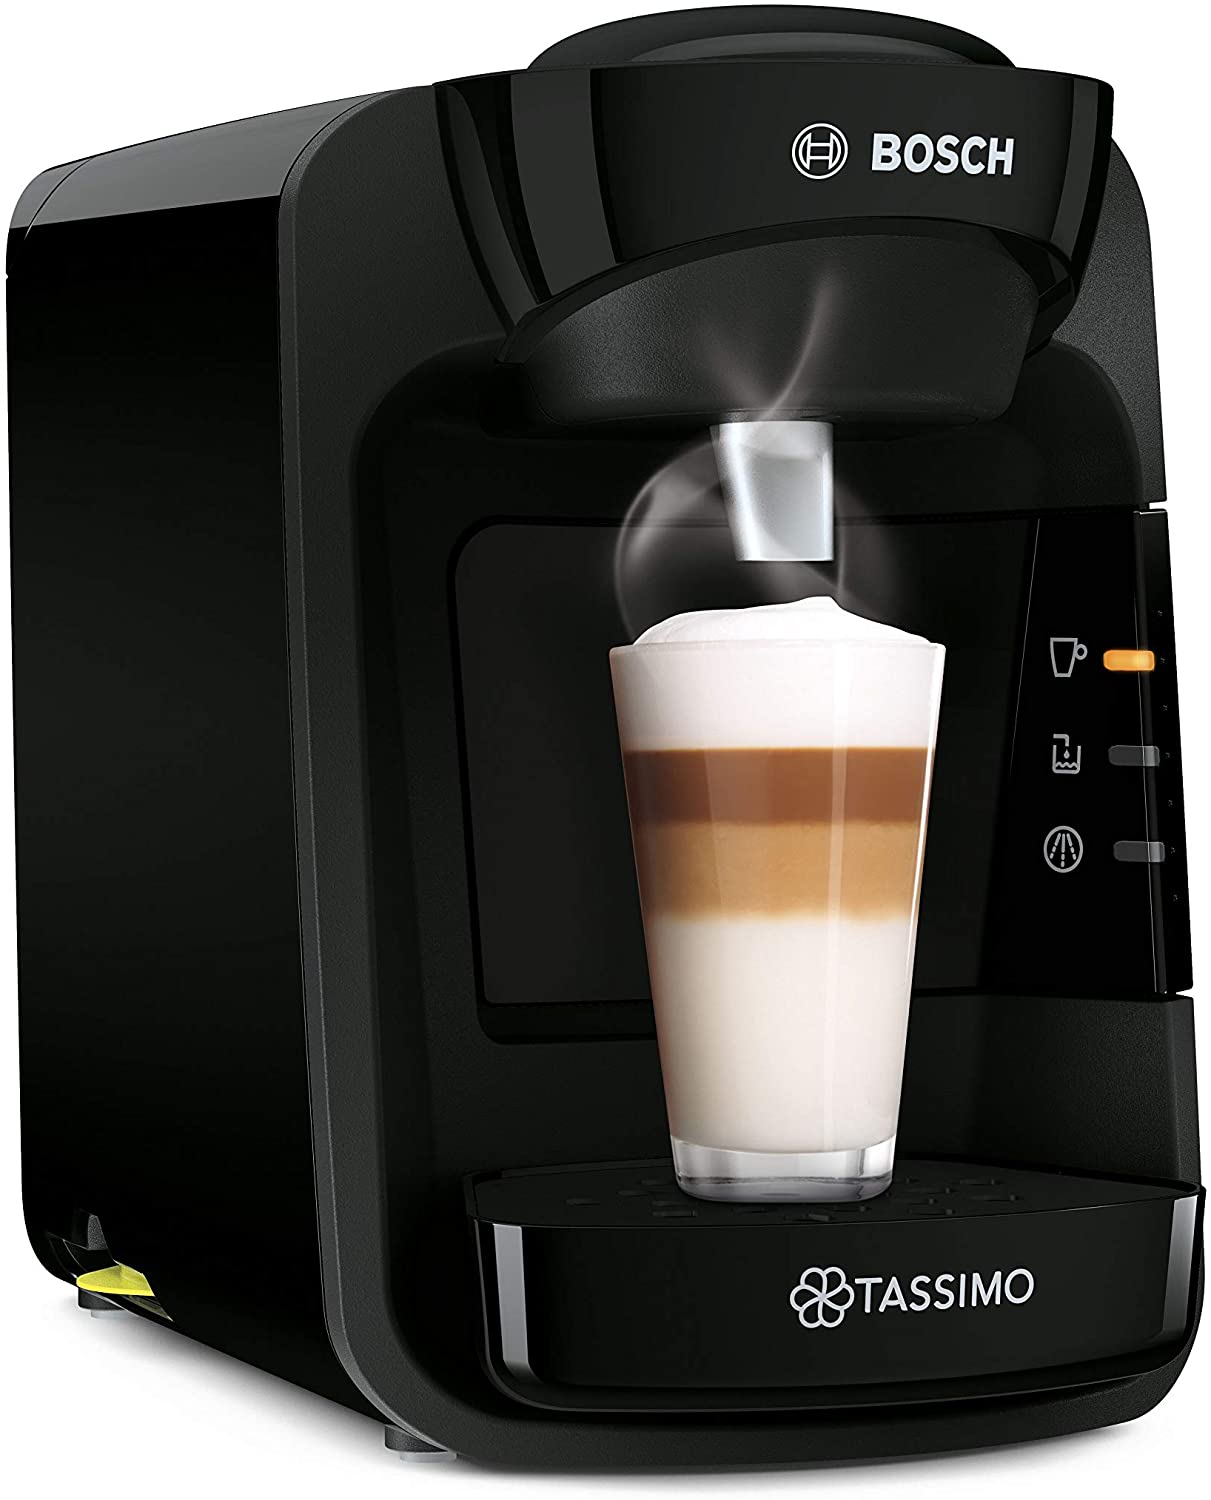 EVER RICH ® - Support pour Capsules de Café T-Disc Bosch Tassimo